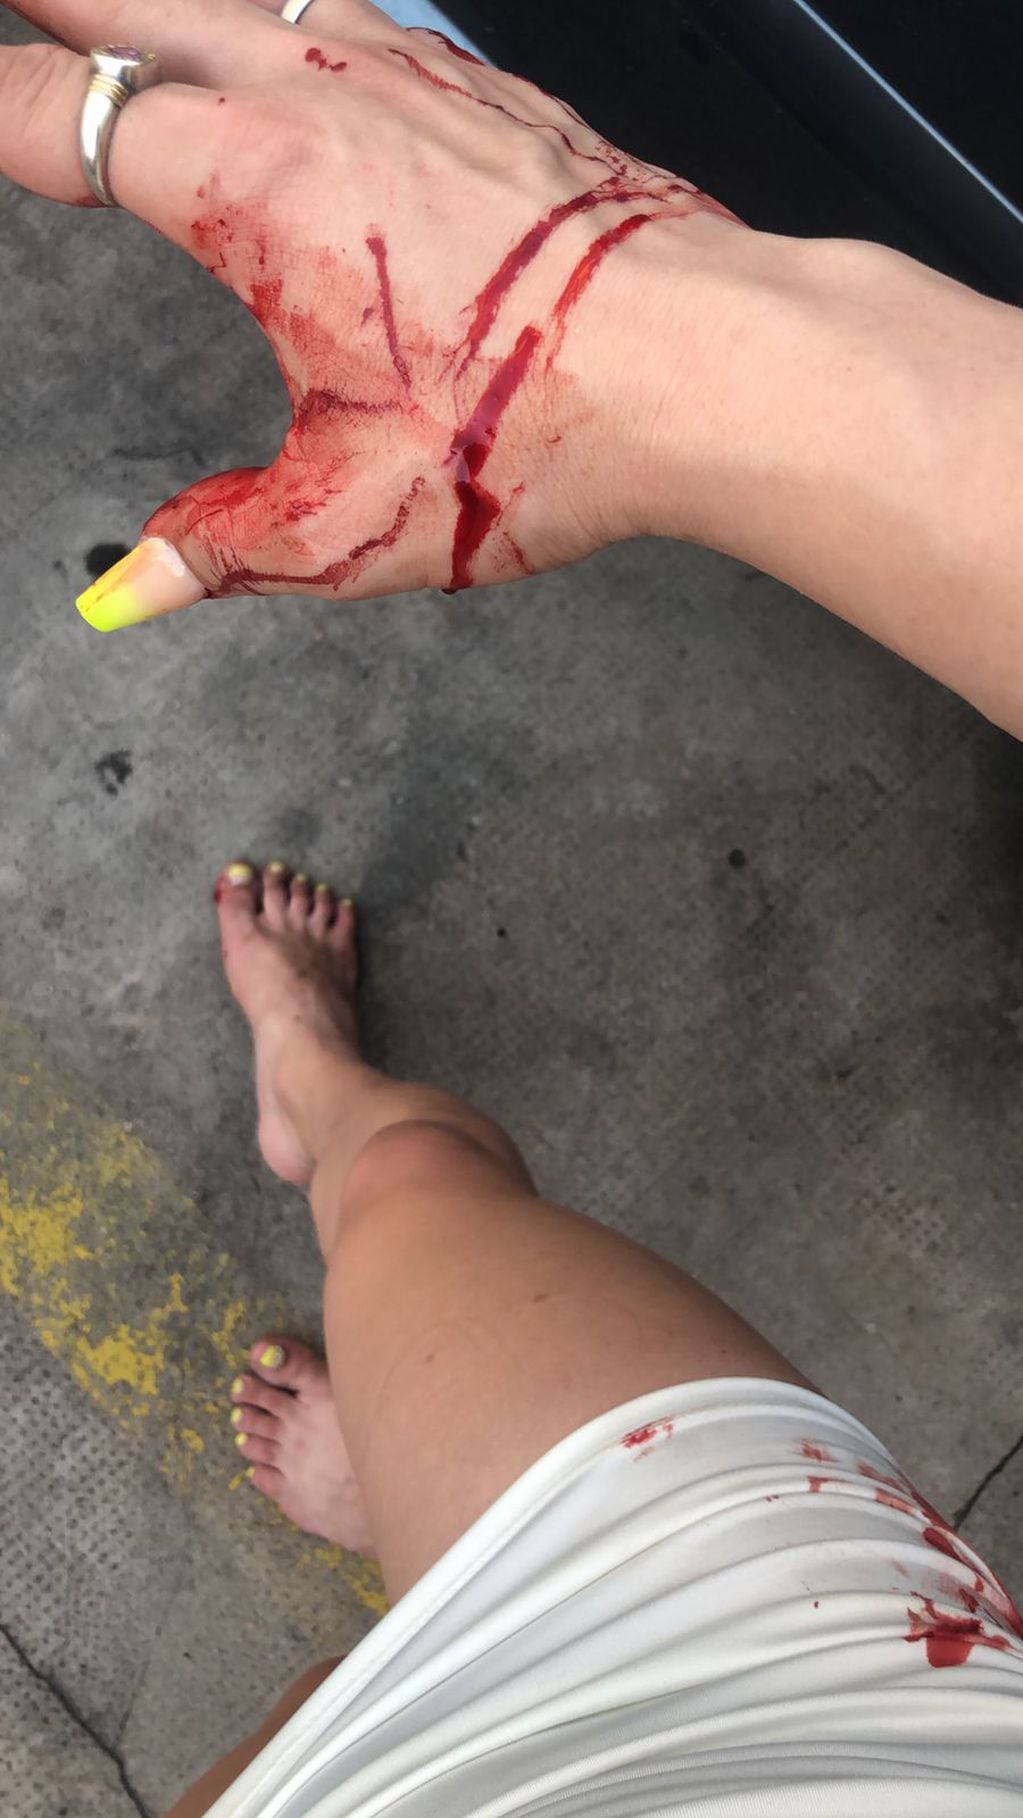 Las imágenes después de la brutal golpiza que recibió Daniela "La Mego".